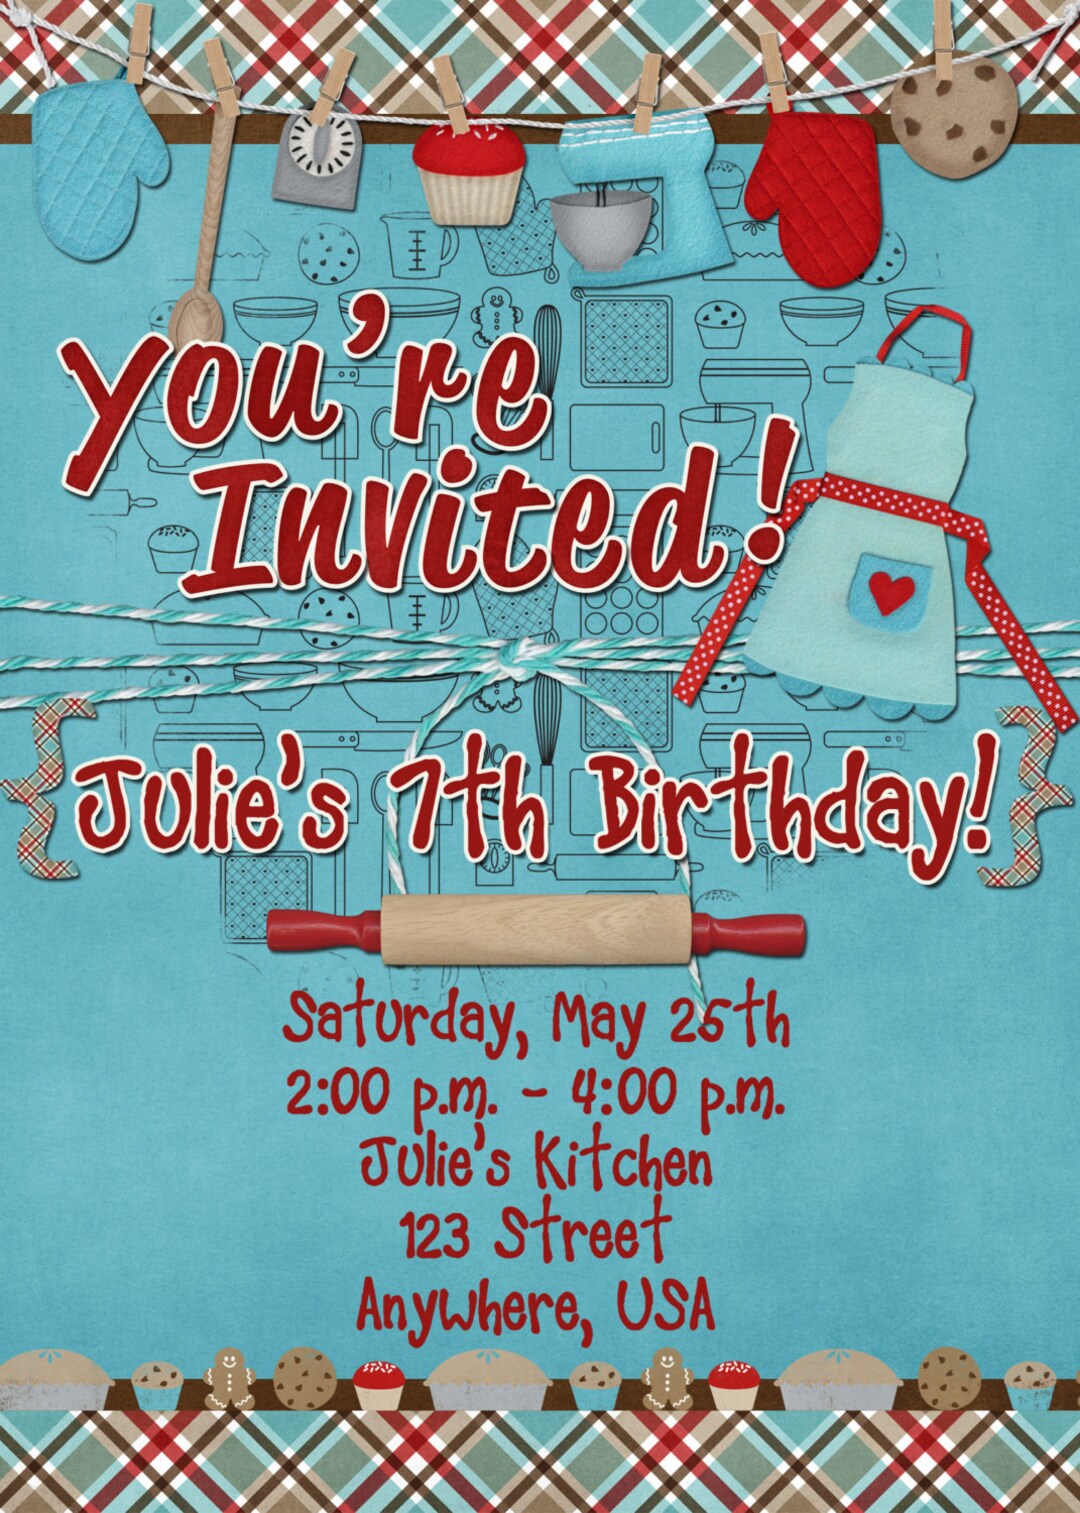 baking-birthday-party-invitation-cooking-birthday-party-etsy